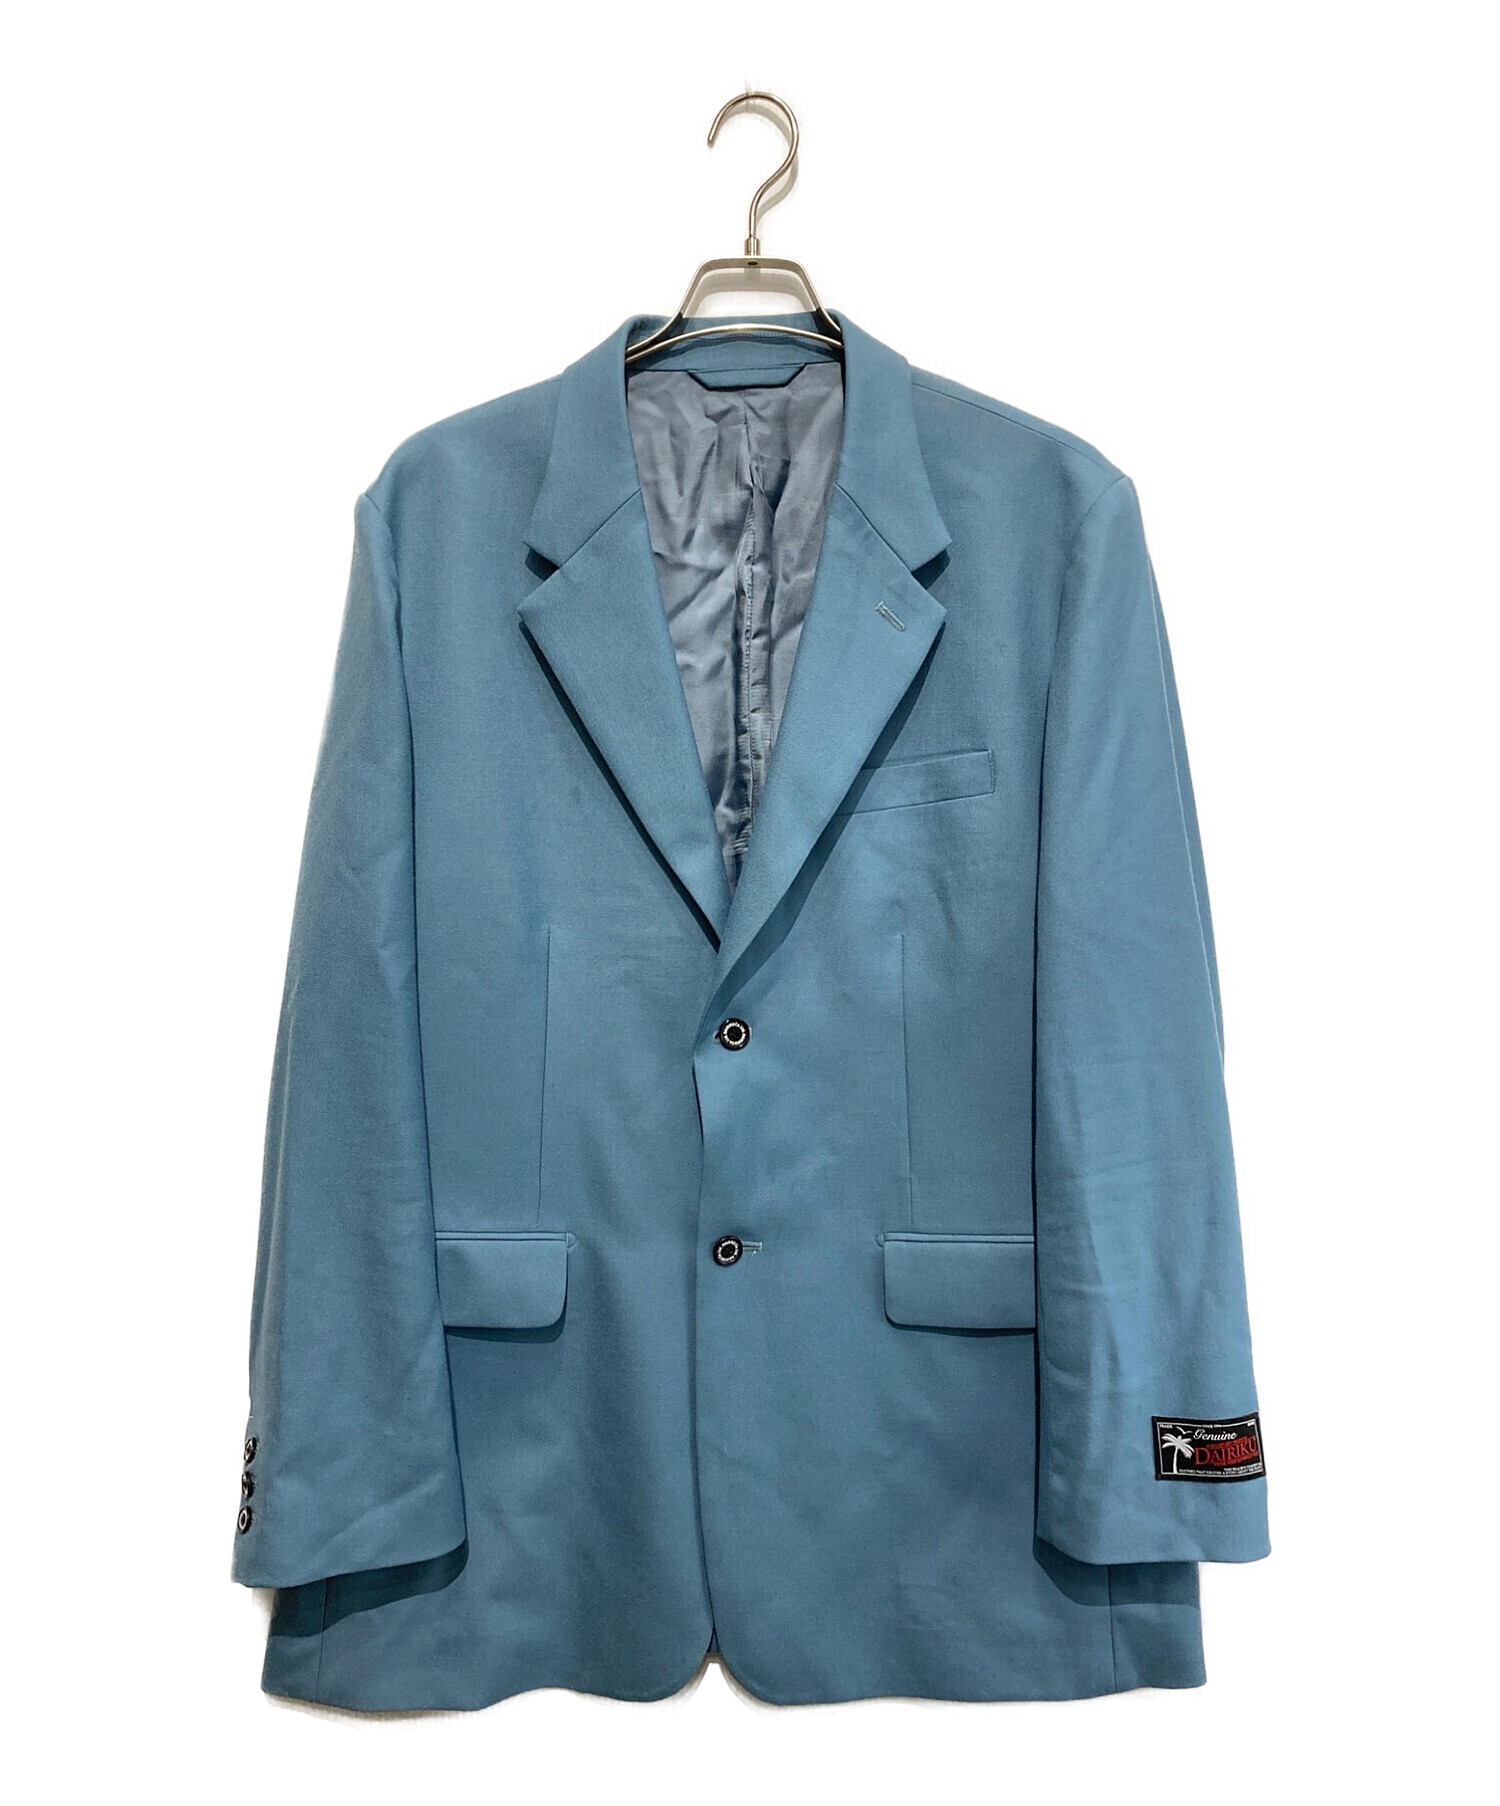 DAIRIKU (ダイリク) Long wool tailored jacket スカイブルー サイズ:SIZE L